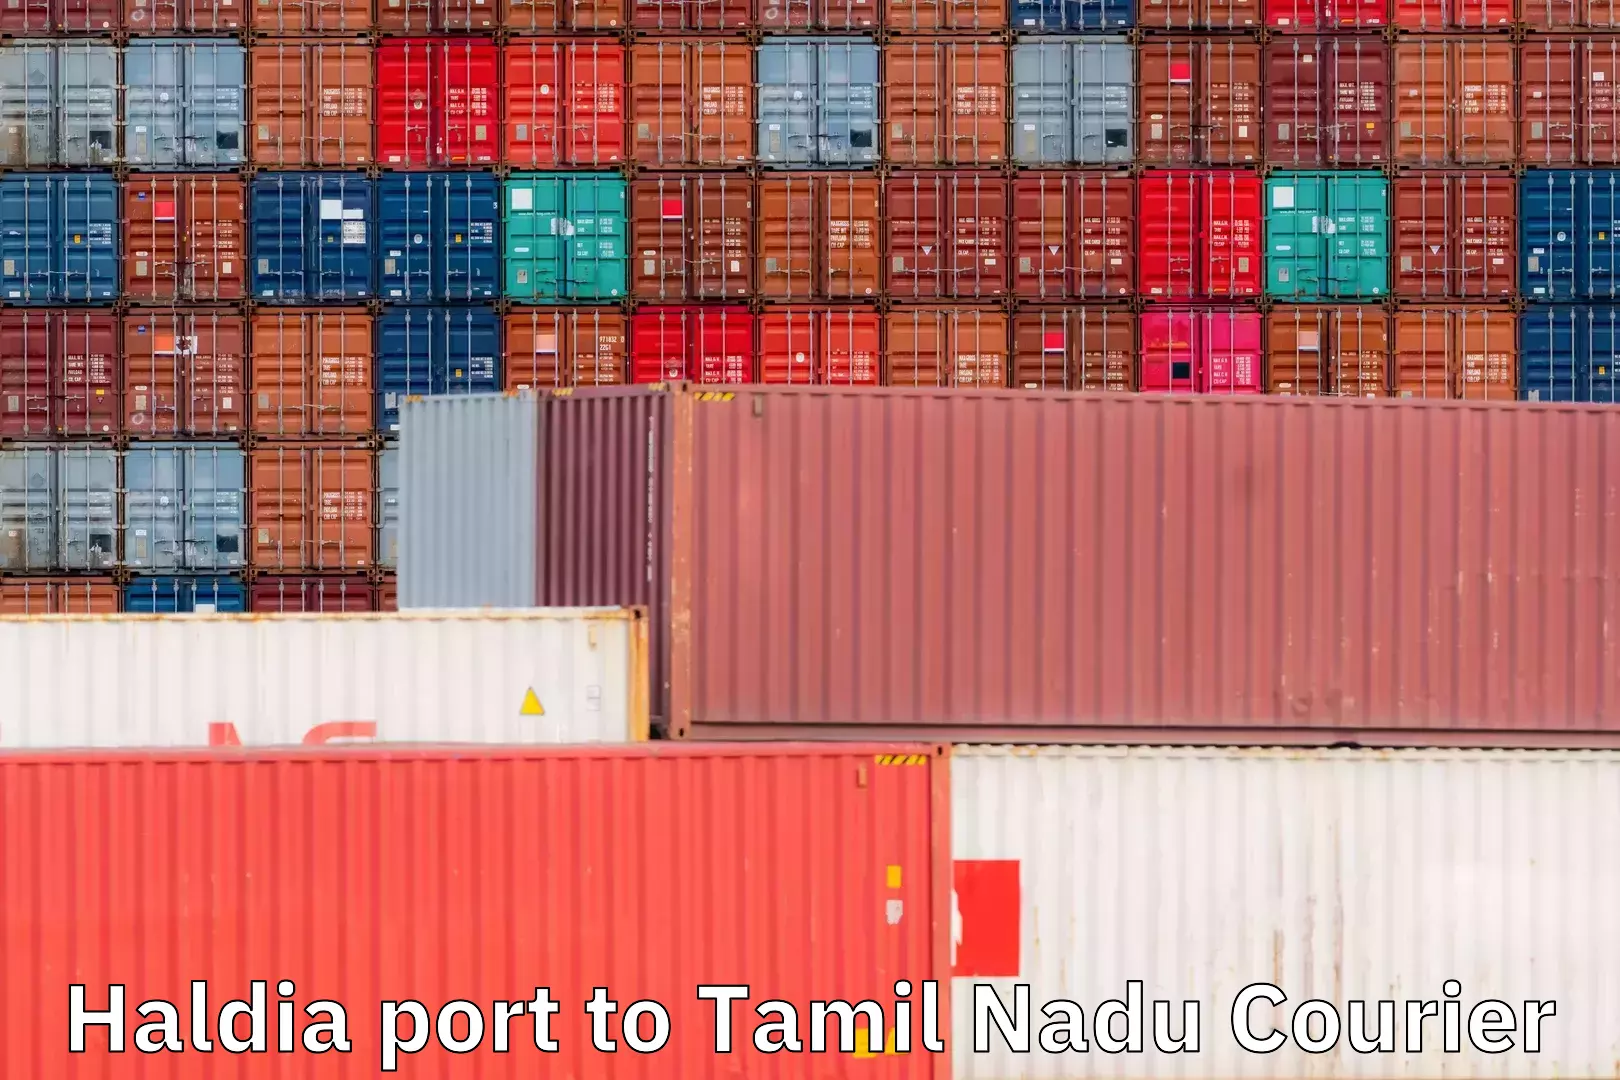 Courier service efficiency Haldia port to Tamil Nadu